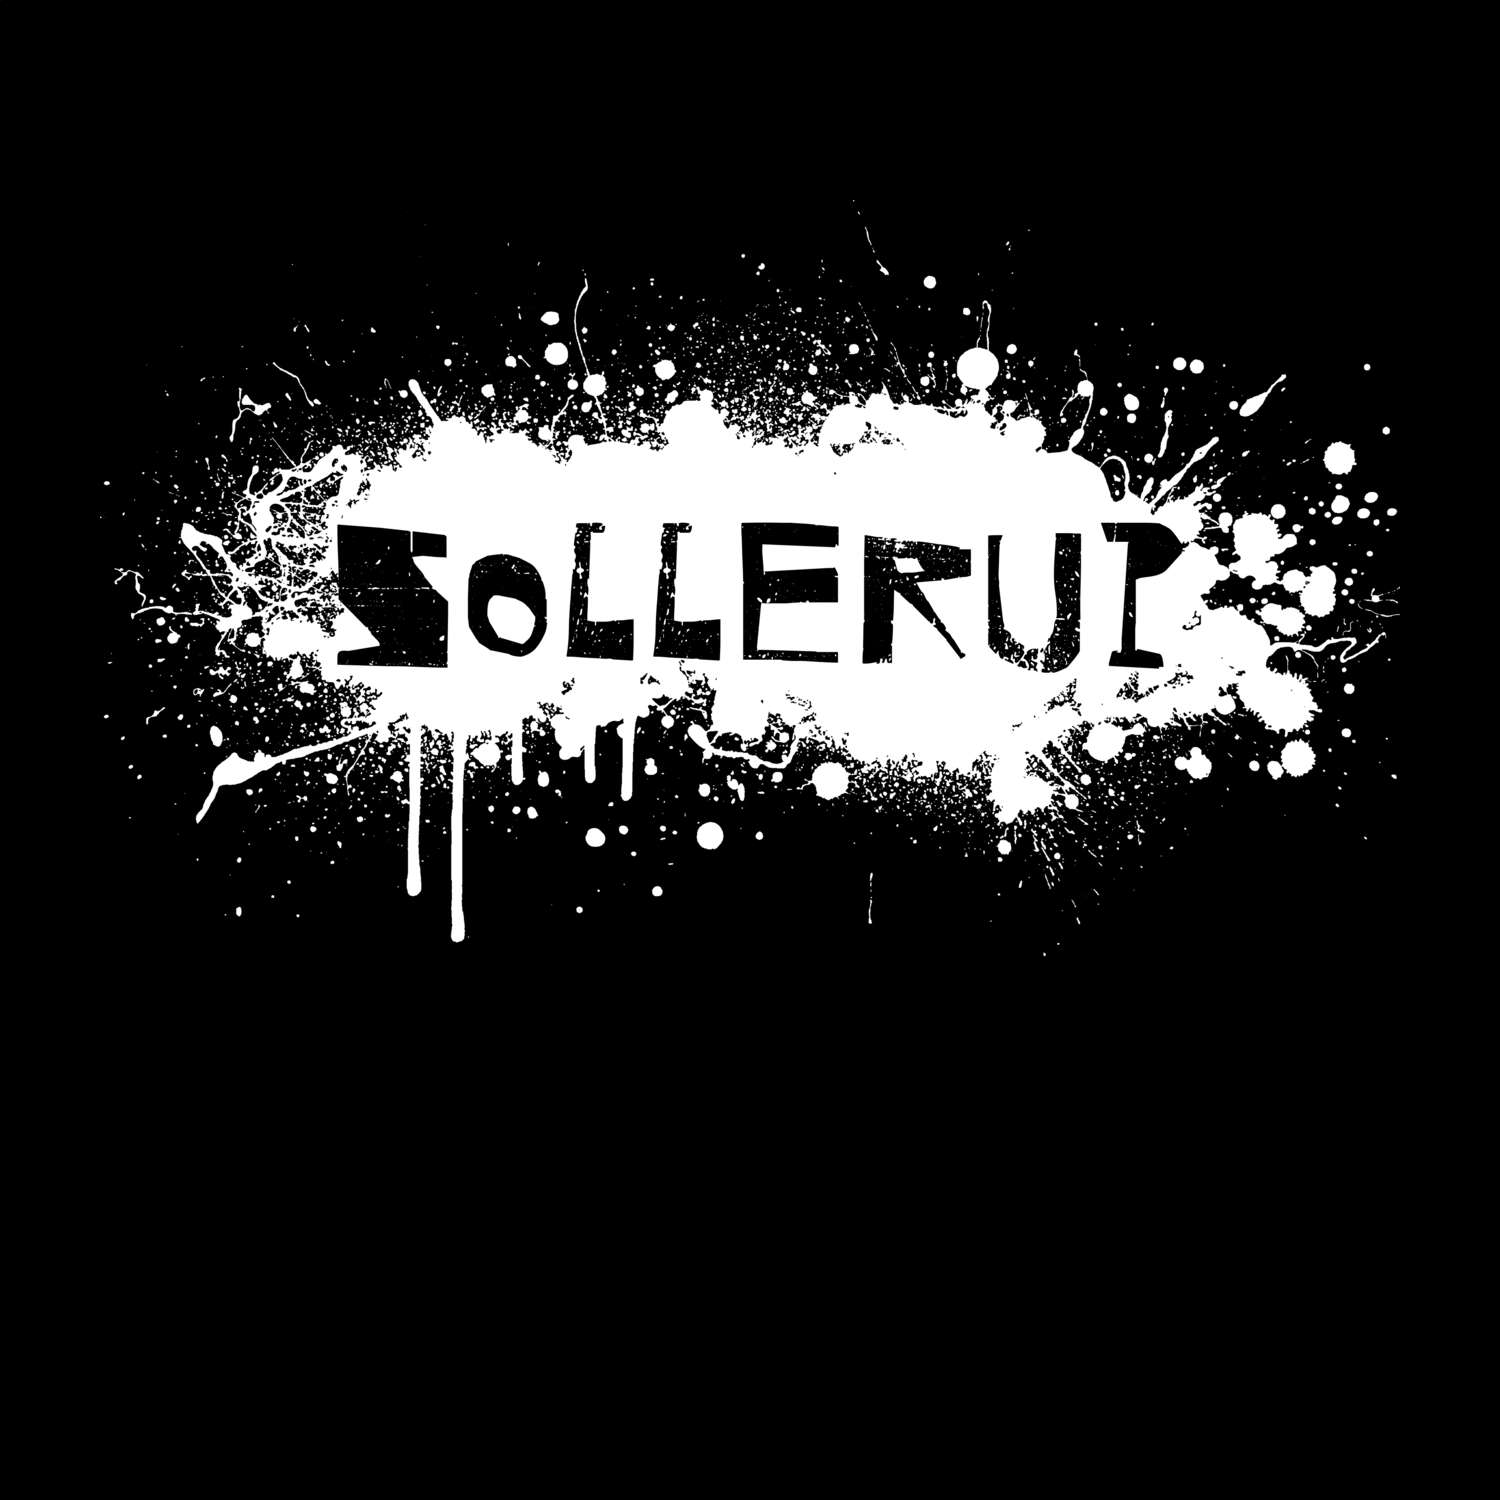 Sollerup T-Shirt »Paint Splash Punk«